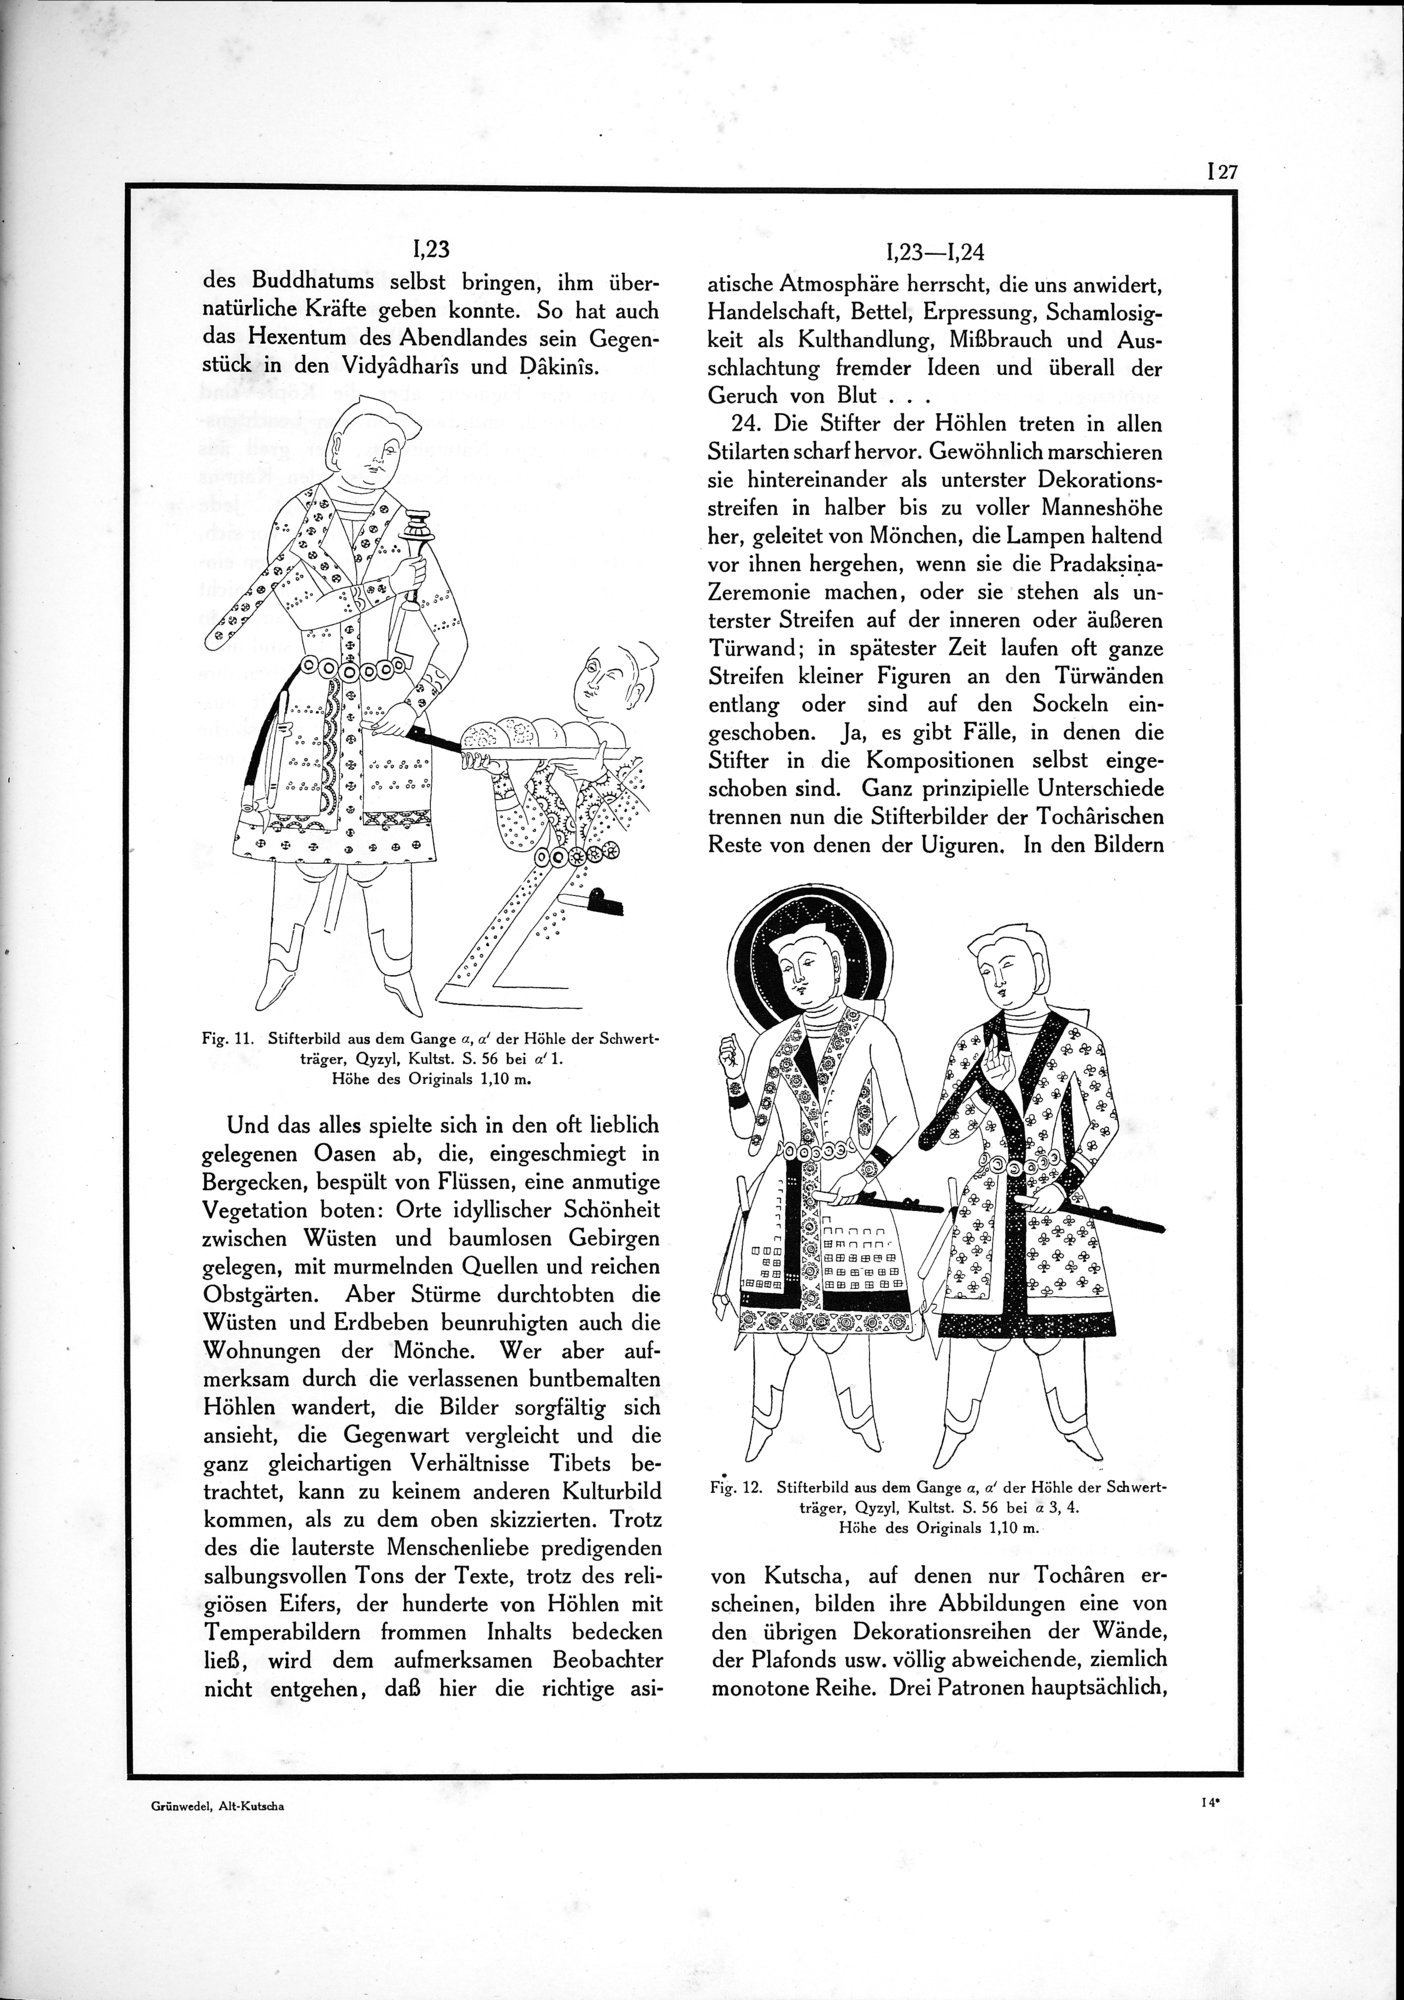 Alt-Kutscha : vol.1 / Page 39 (Grayscale High Resolution Image)